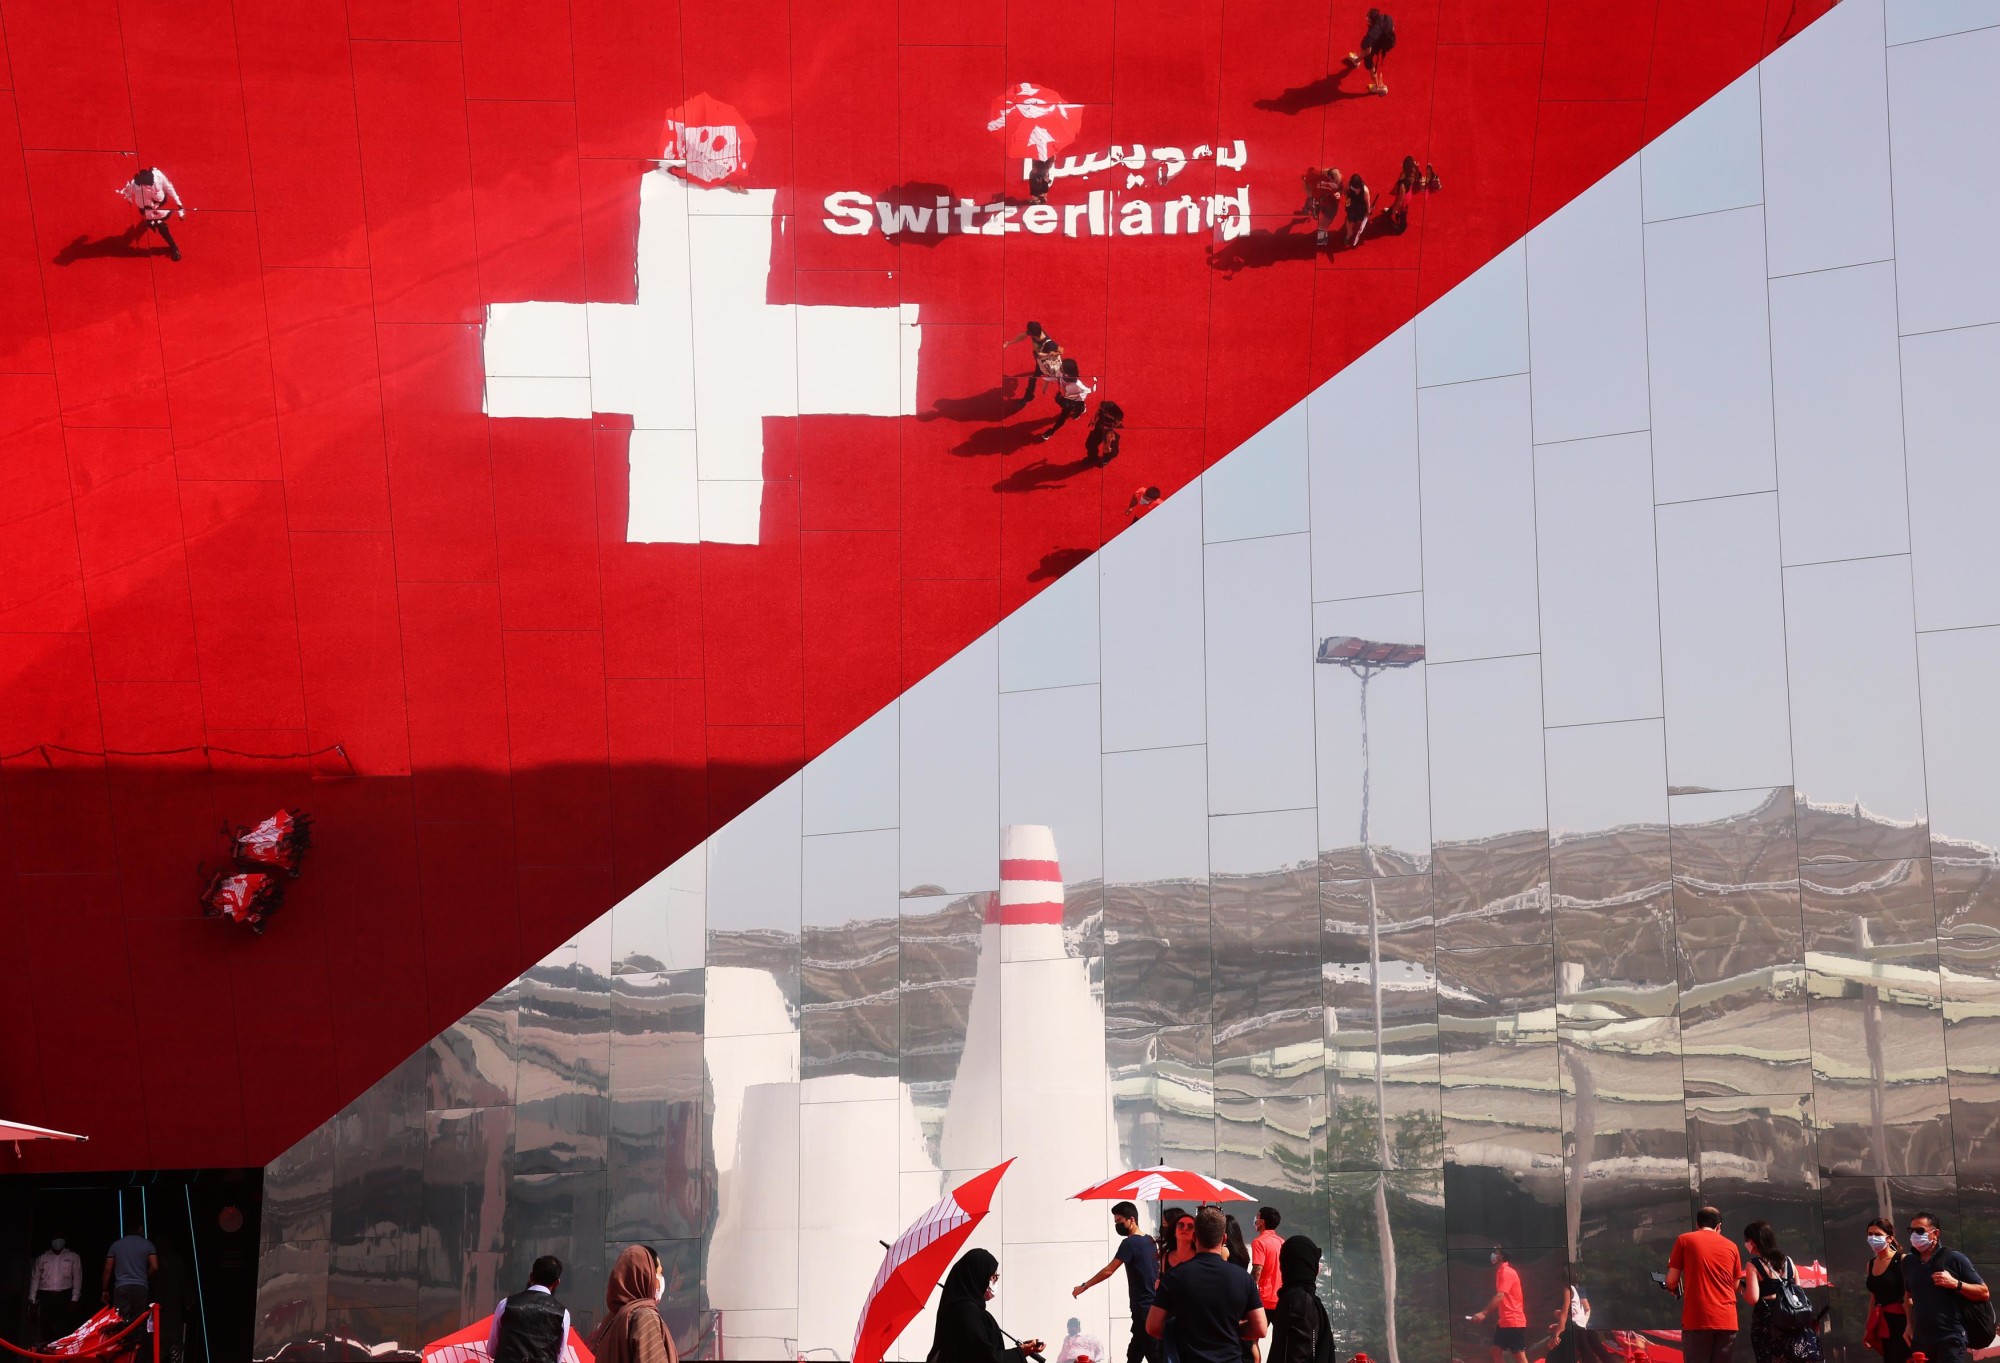 Visitors are reflected on the Switzerland Pavilion Web Image m41593